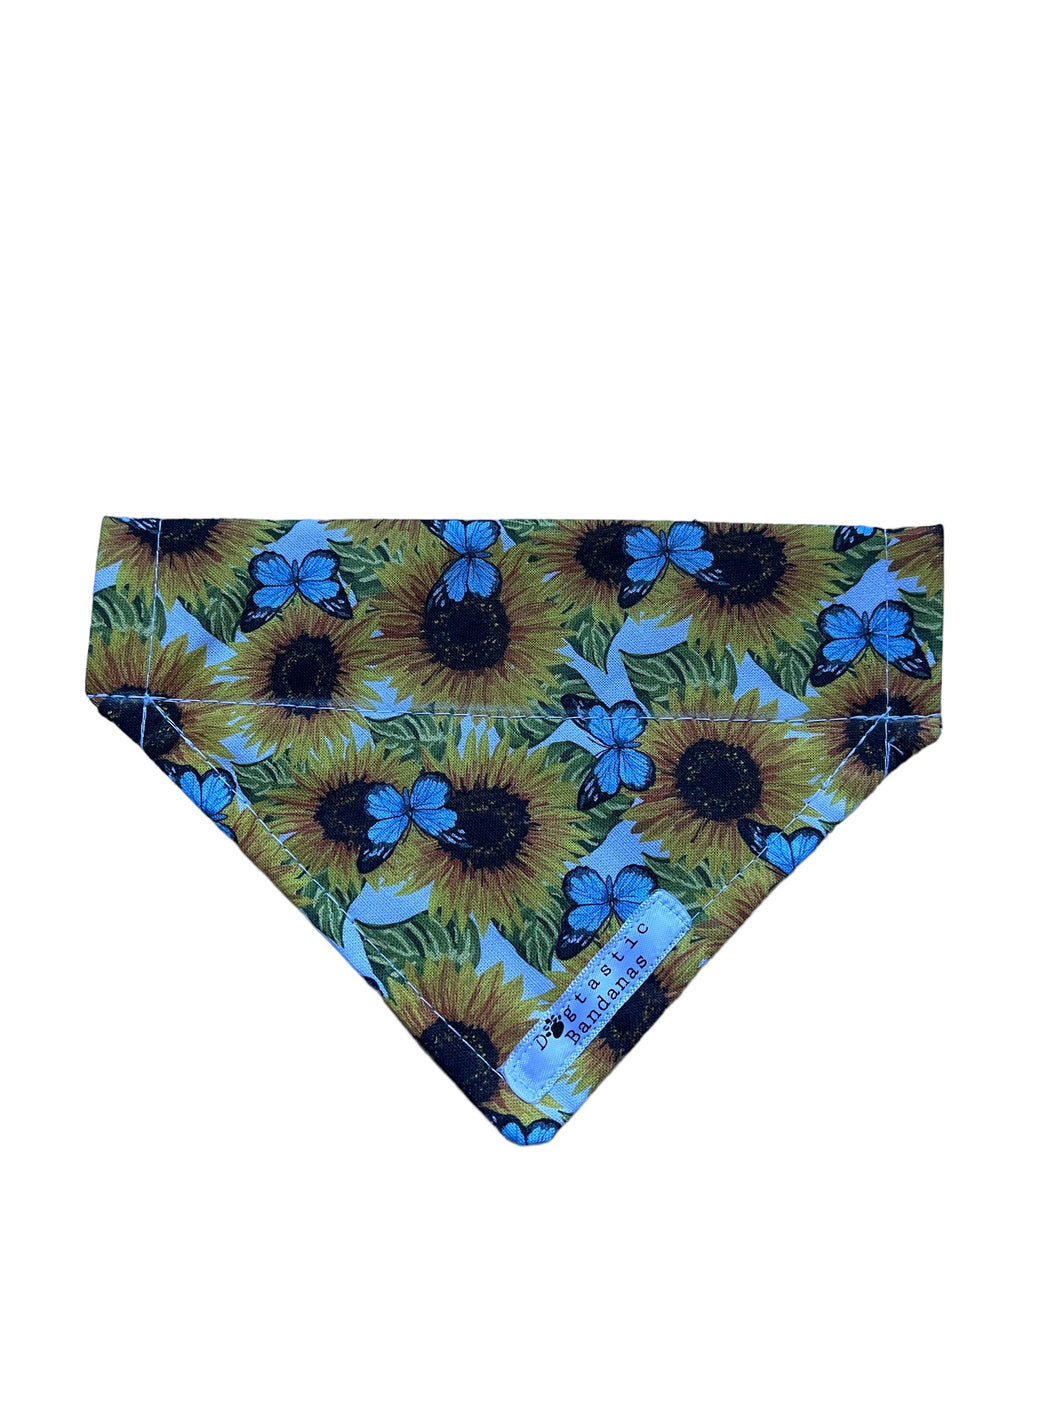 Sunflower dog/pet bandana